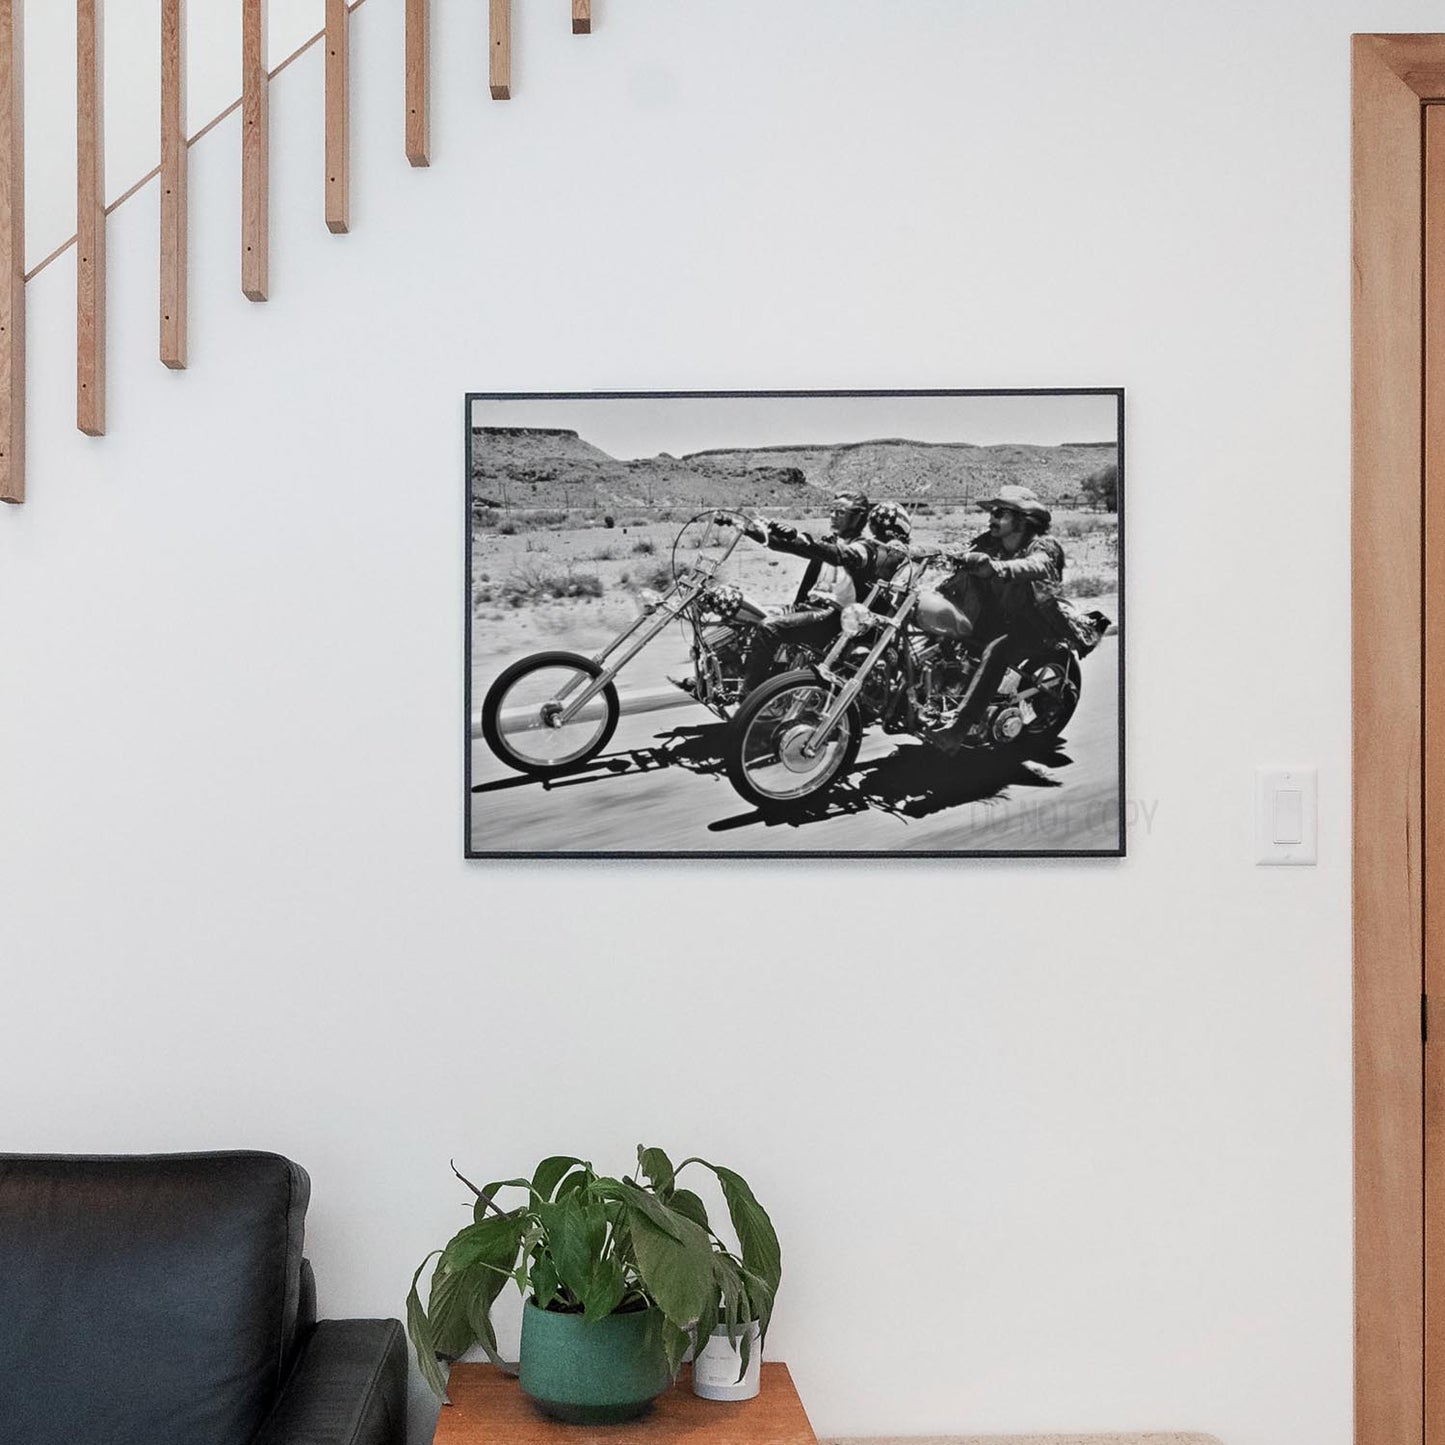 Easy Rider Movie Vintage Motorcycles 1960s